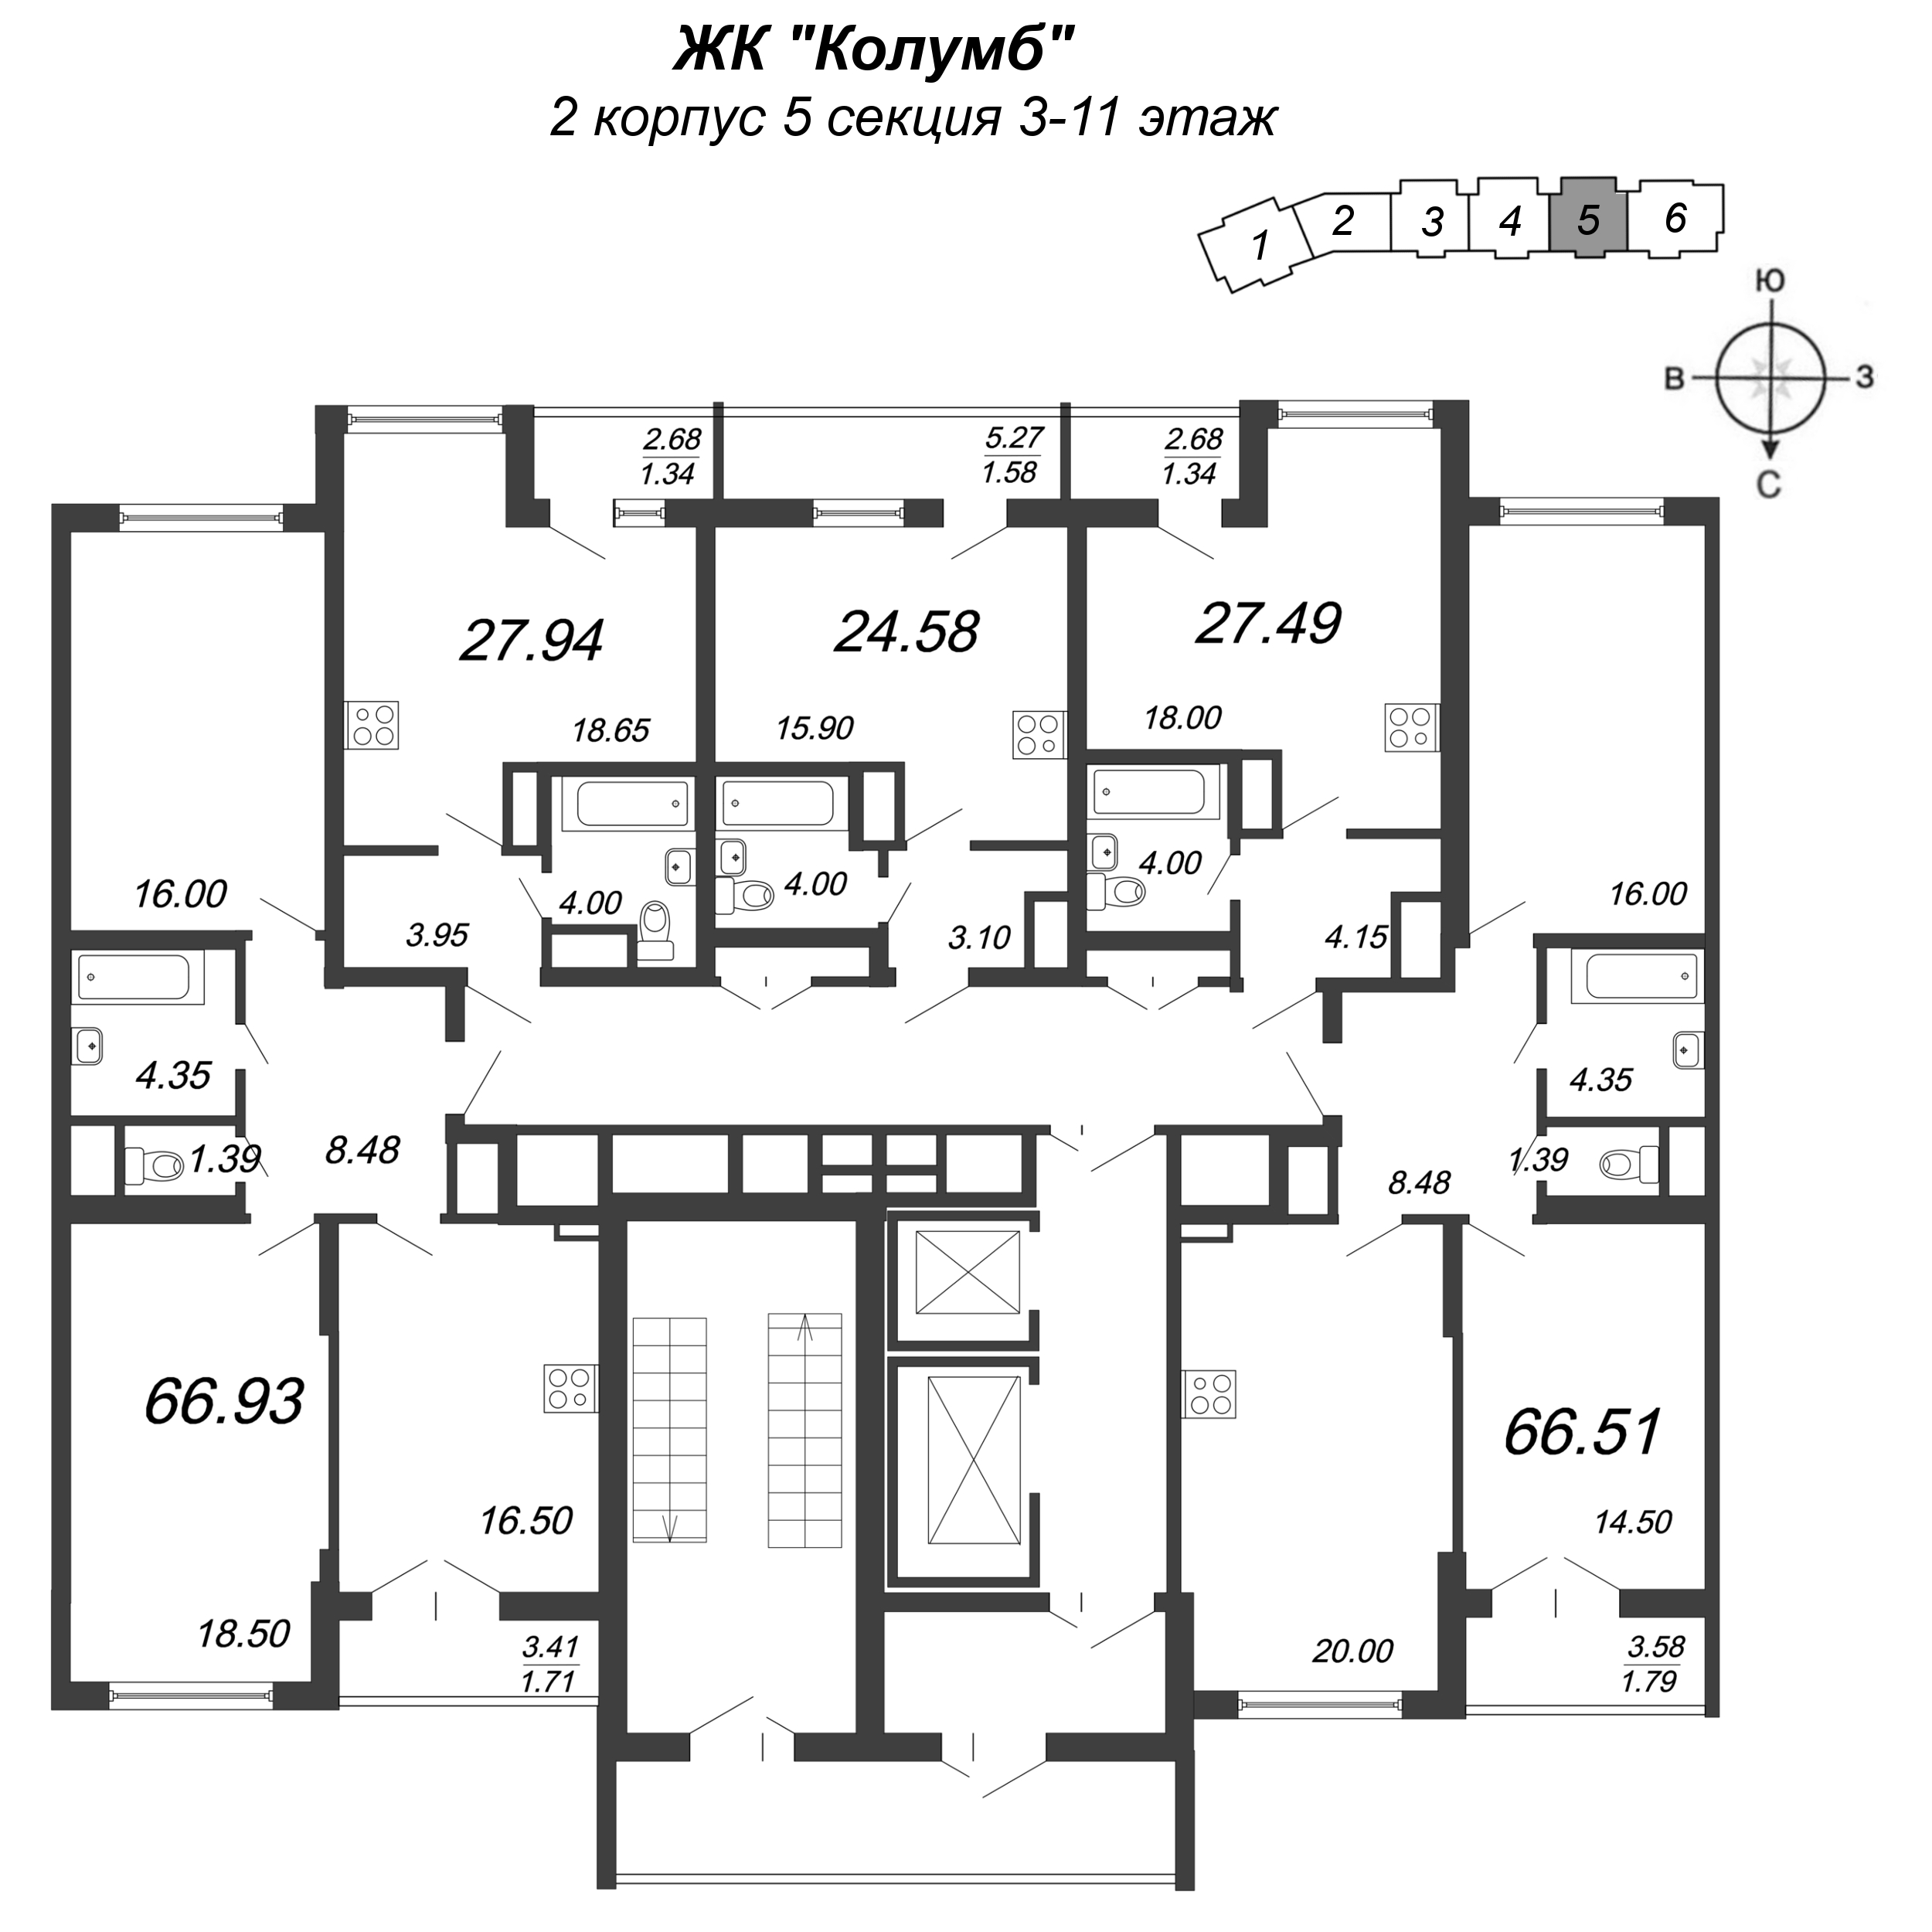 3-комнатная (Евро) квартира, 67.8 м² - планировка этажа